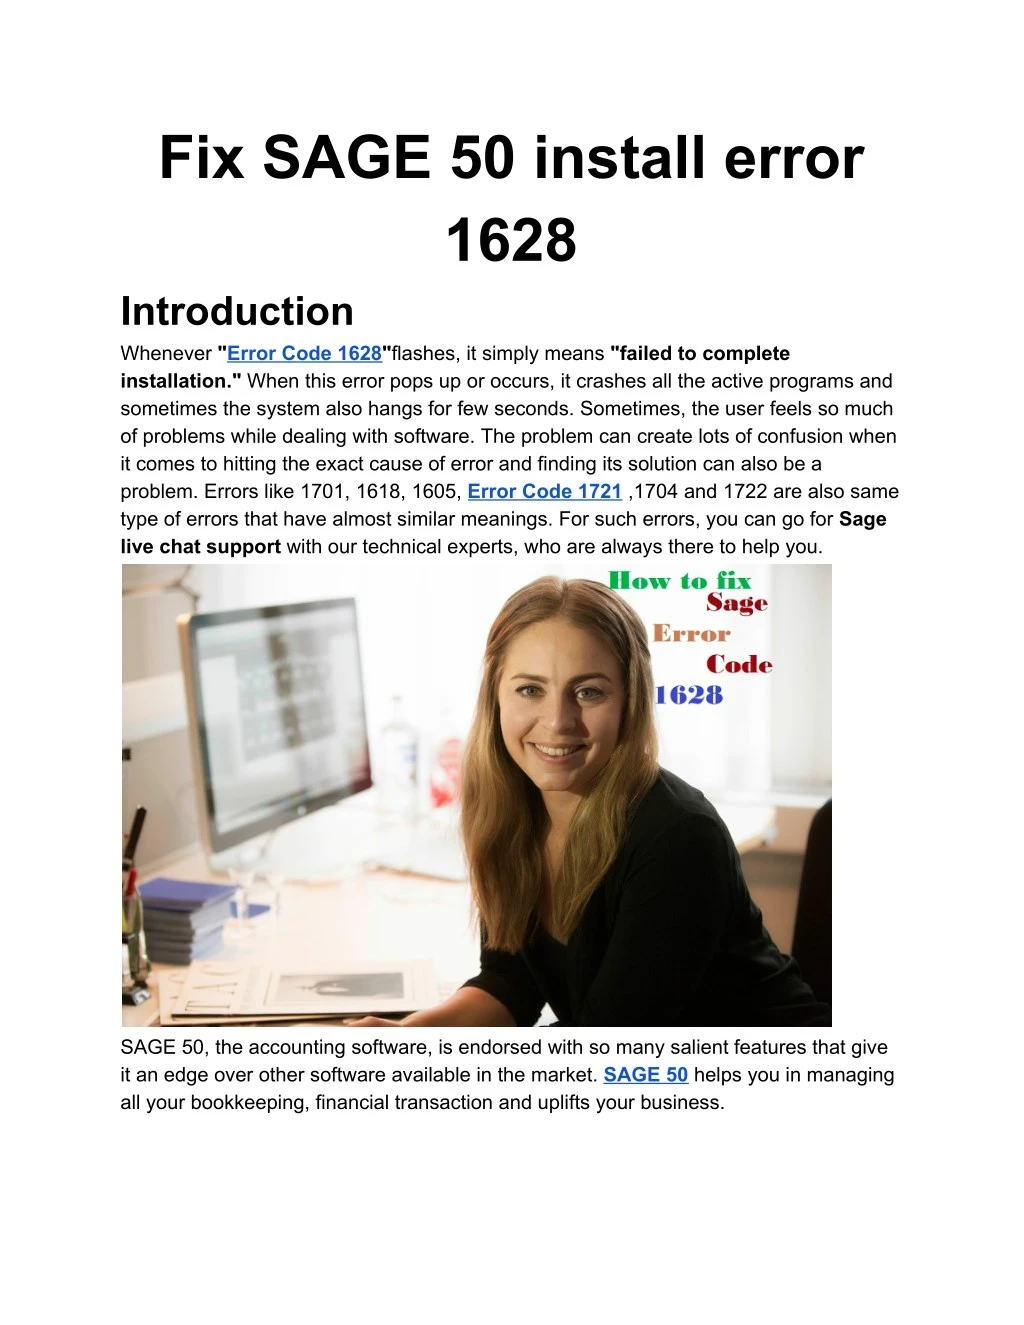 fix sage 50 install error 1628 introduction